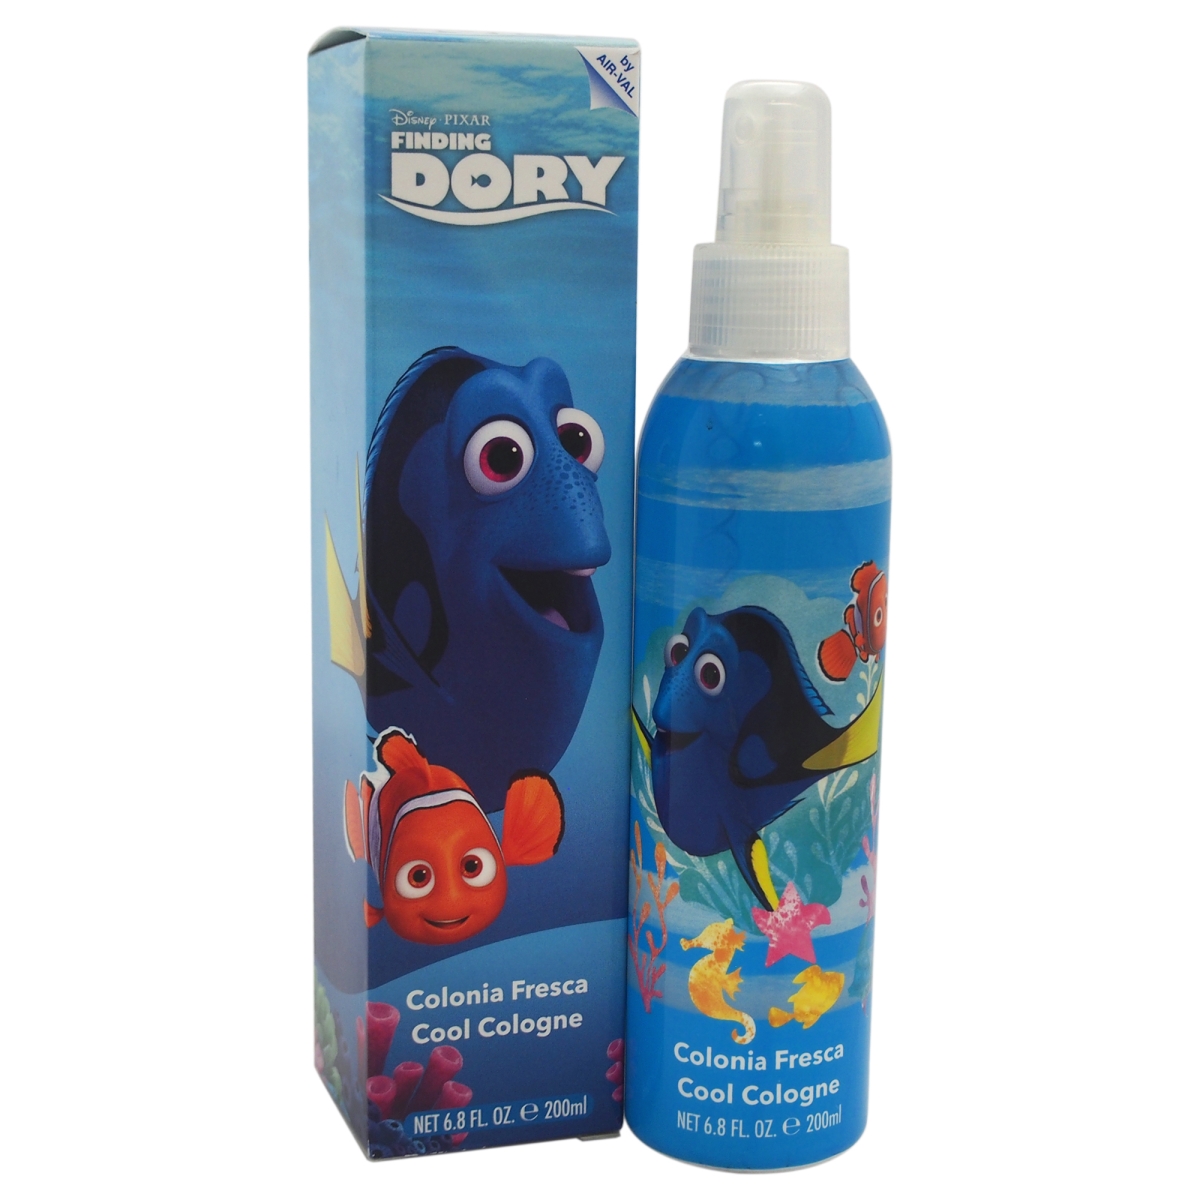 K-bb-1061 6.8 Oz Finding Dory Cool Cologne Body Spray For Kids